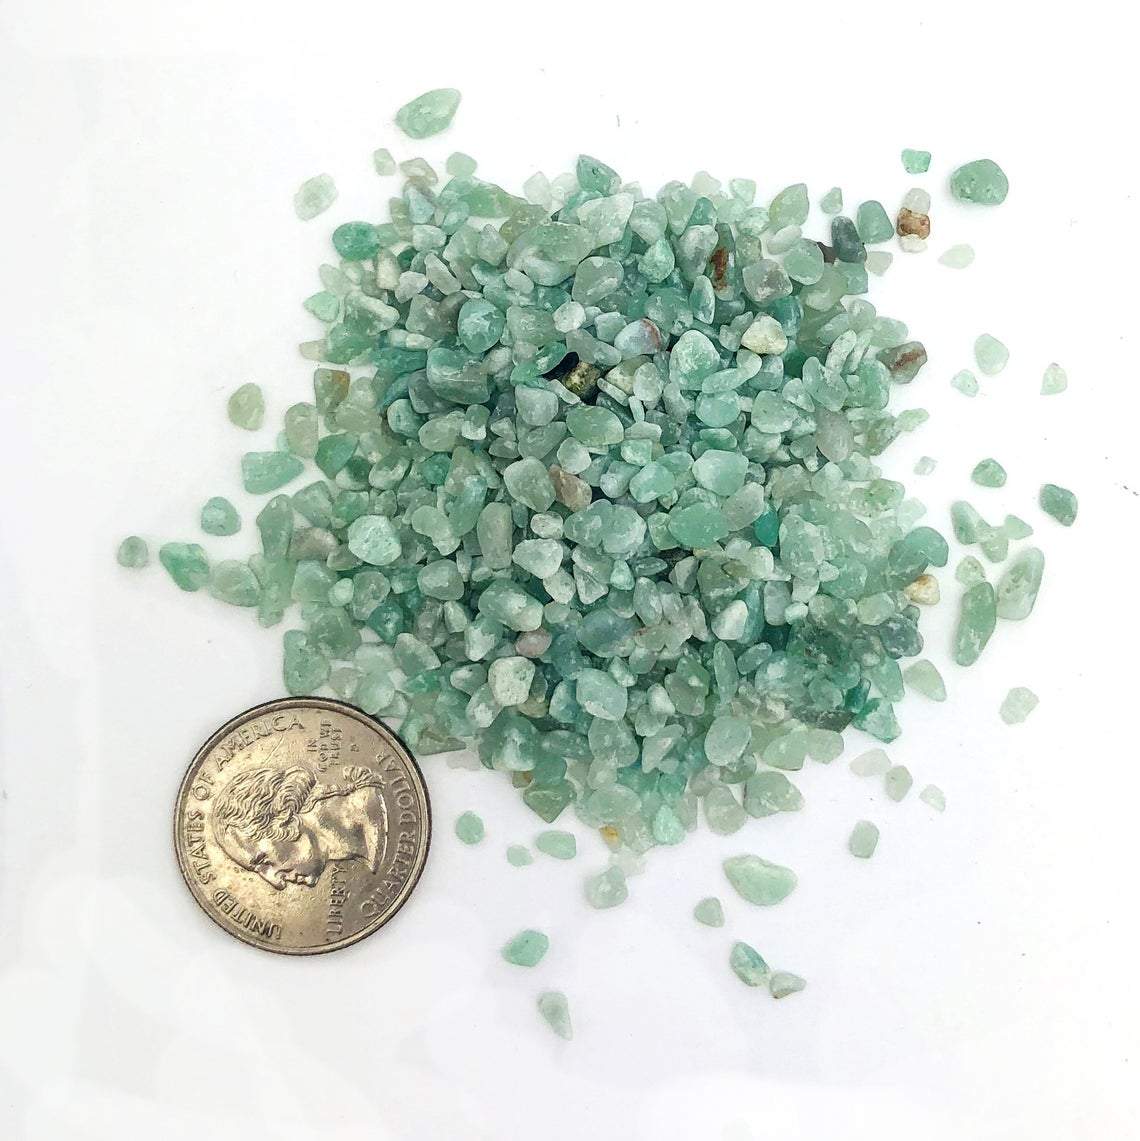 Green Quartz Tiny Chip Stones next to a quarter for size reference